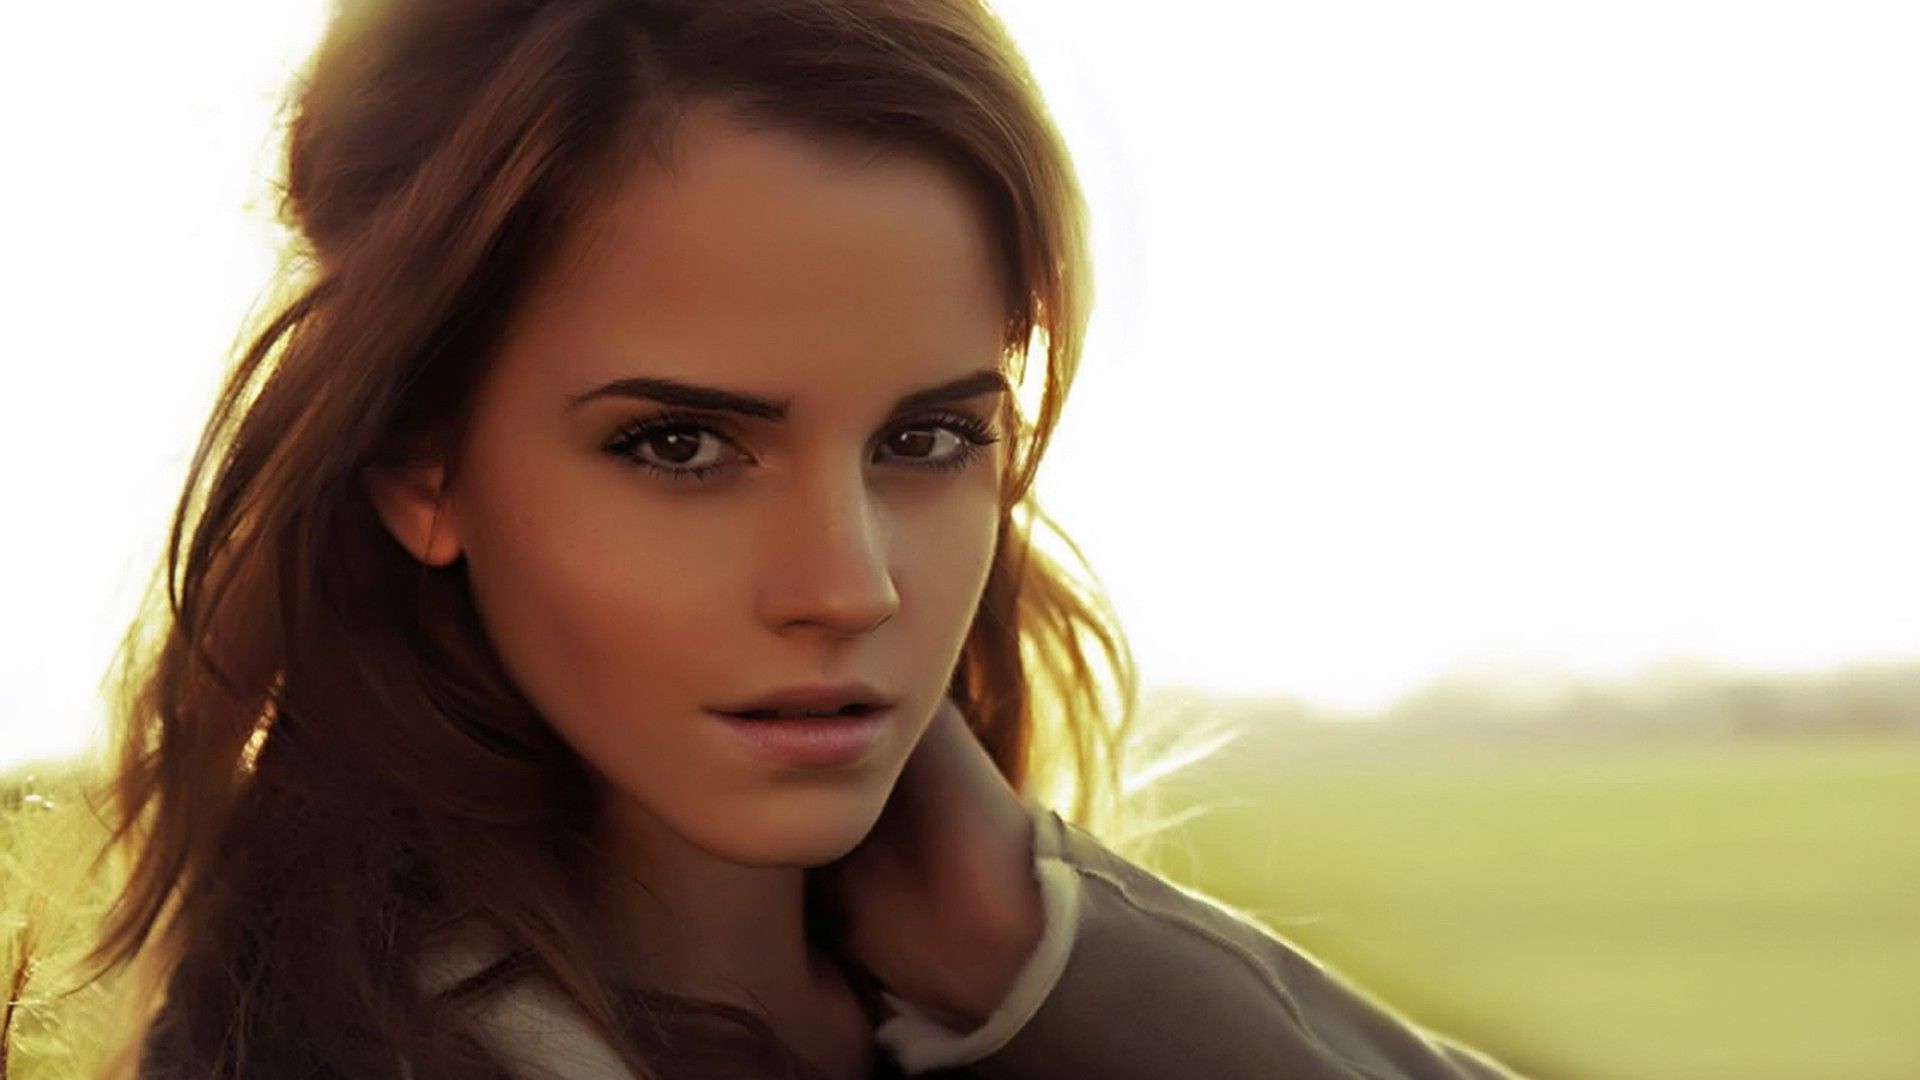 X Emma Watson Wallpaper Hd Desktop Y Fondo M Vil De Emma Watson Famosos Todo Fondos